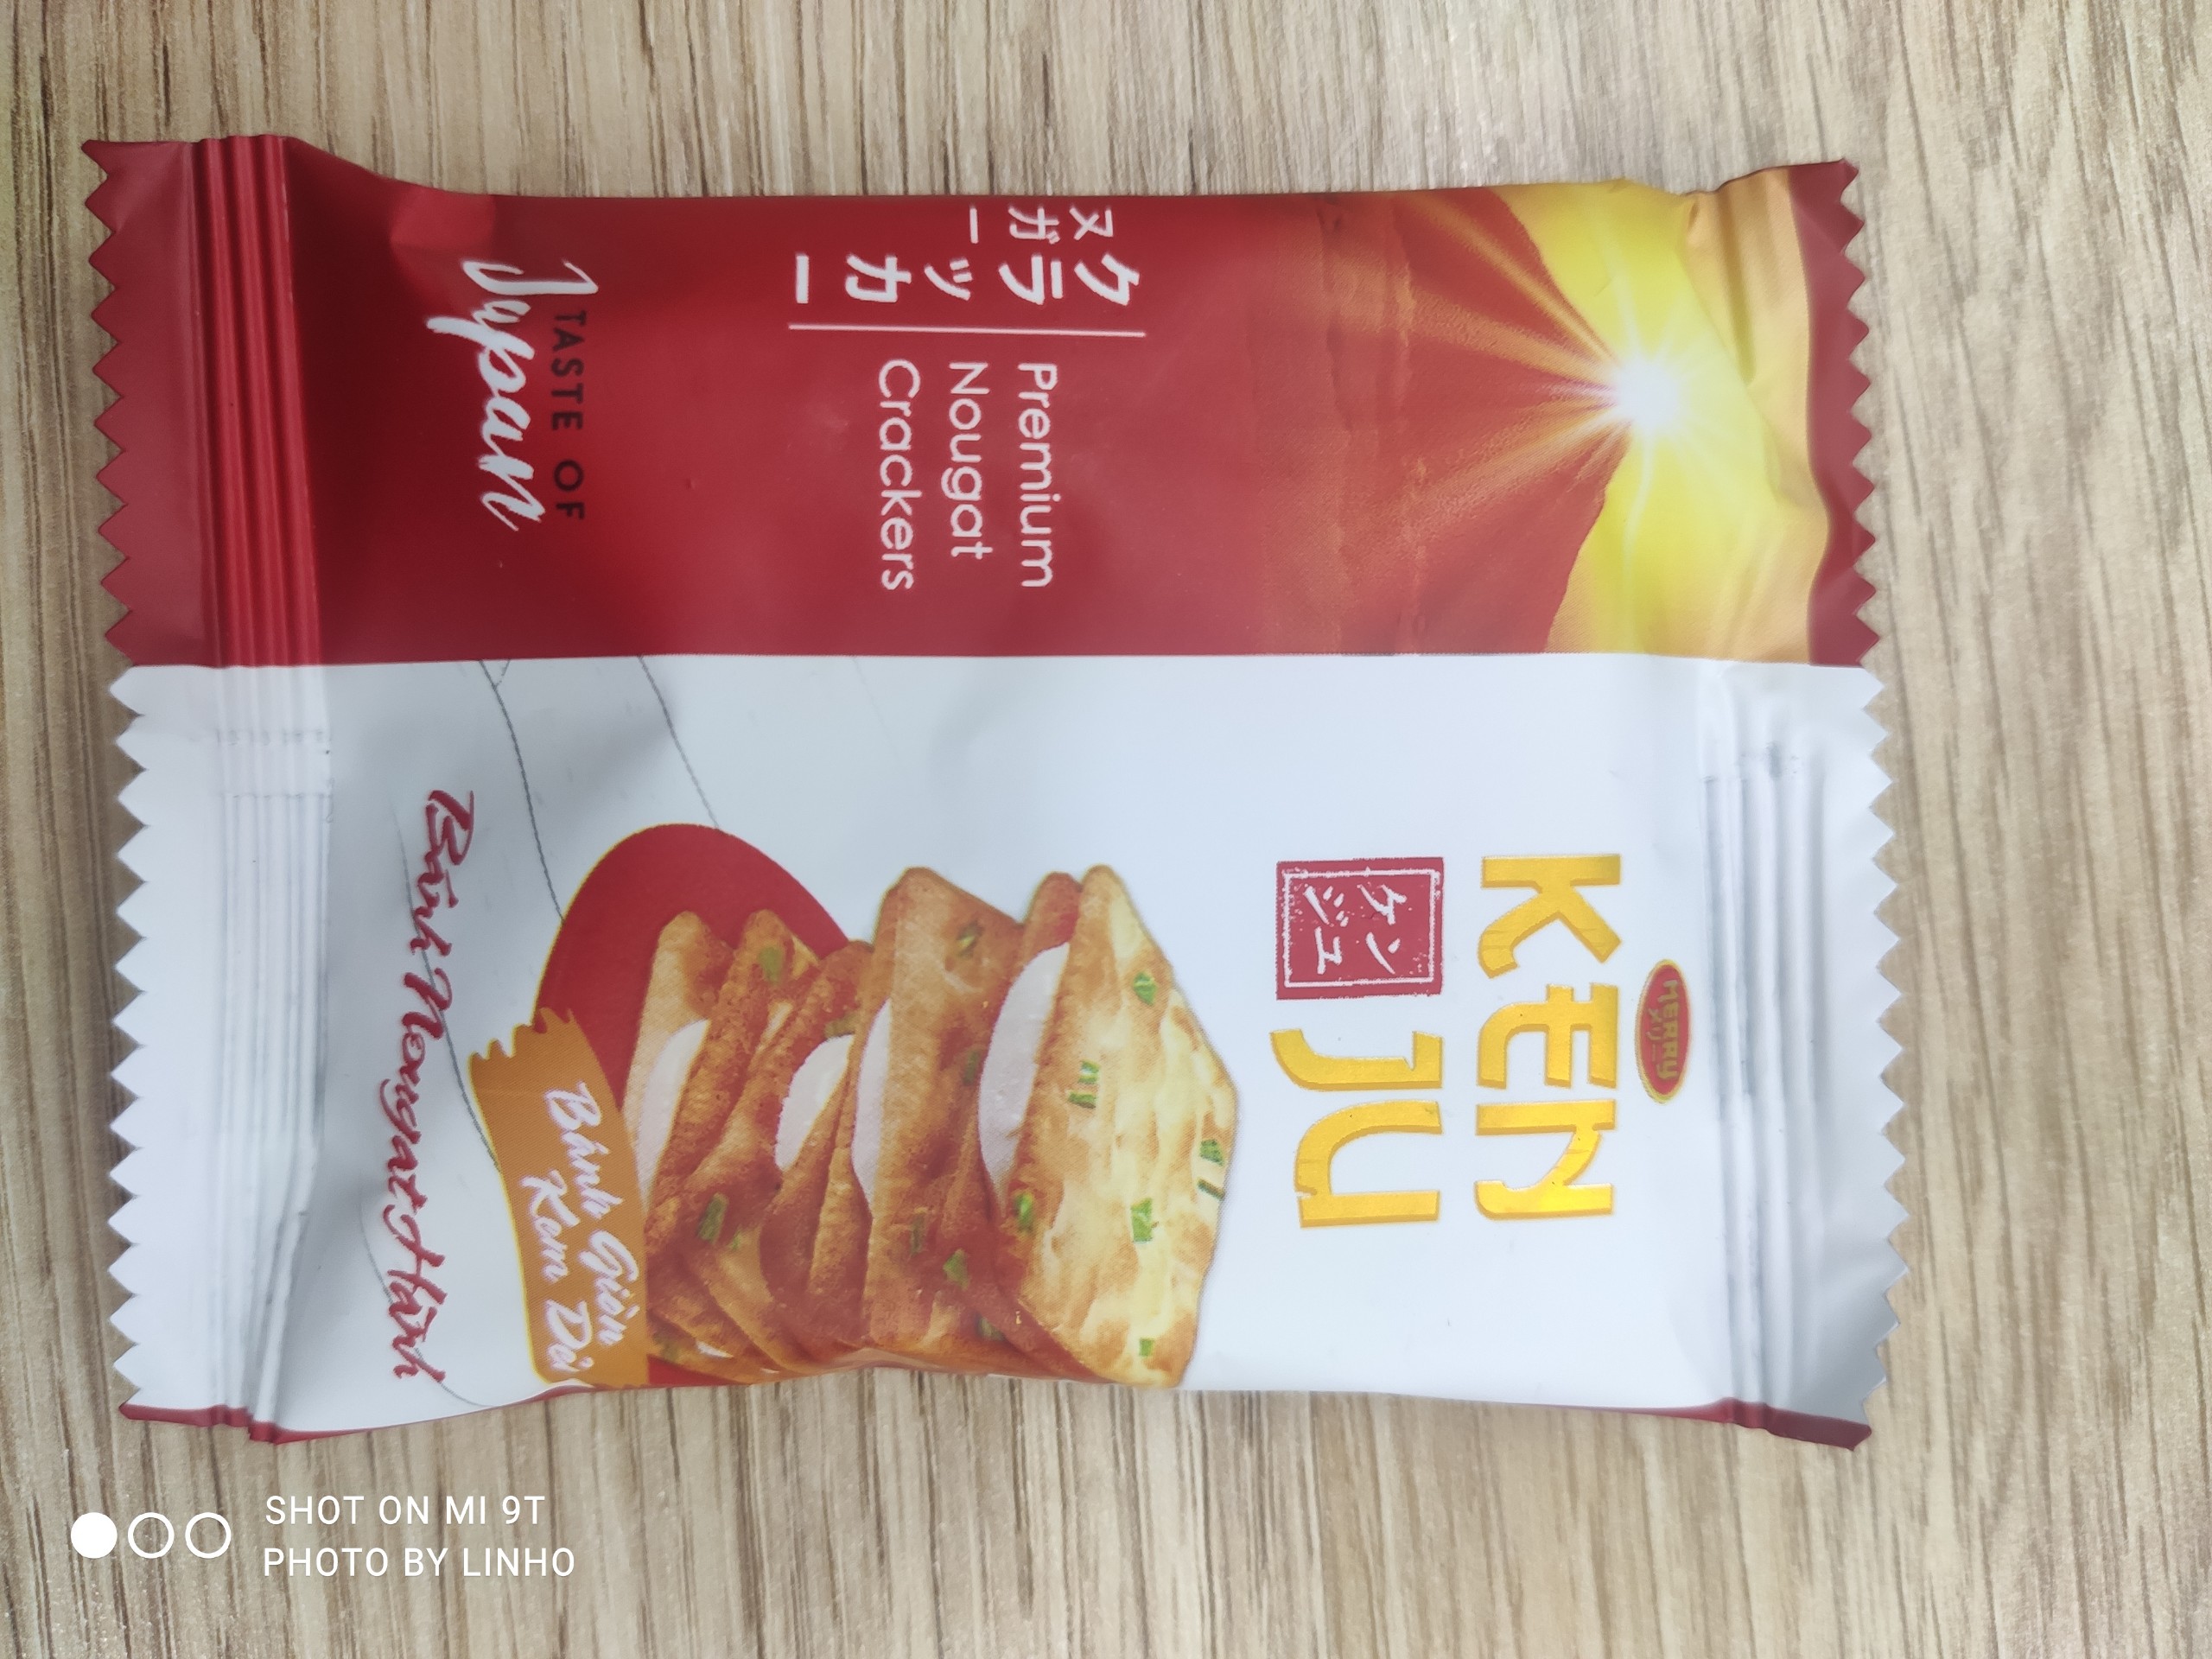 [MUA 1 TẶNG 1] Combo 3 hộp bánh Kenju nougat kem dẻo Richy